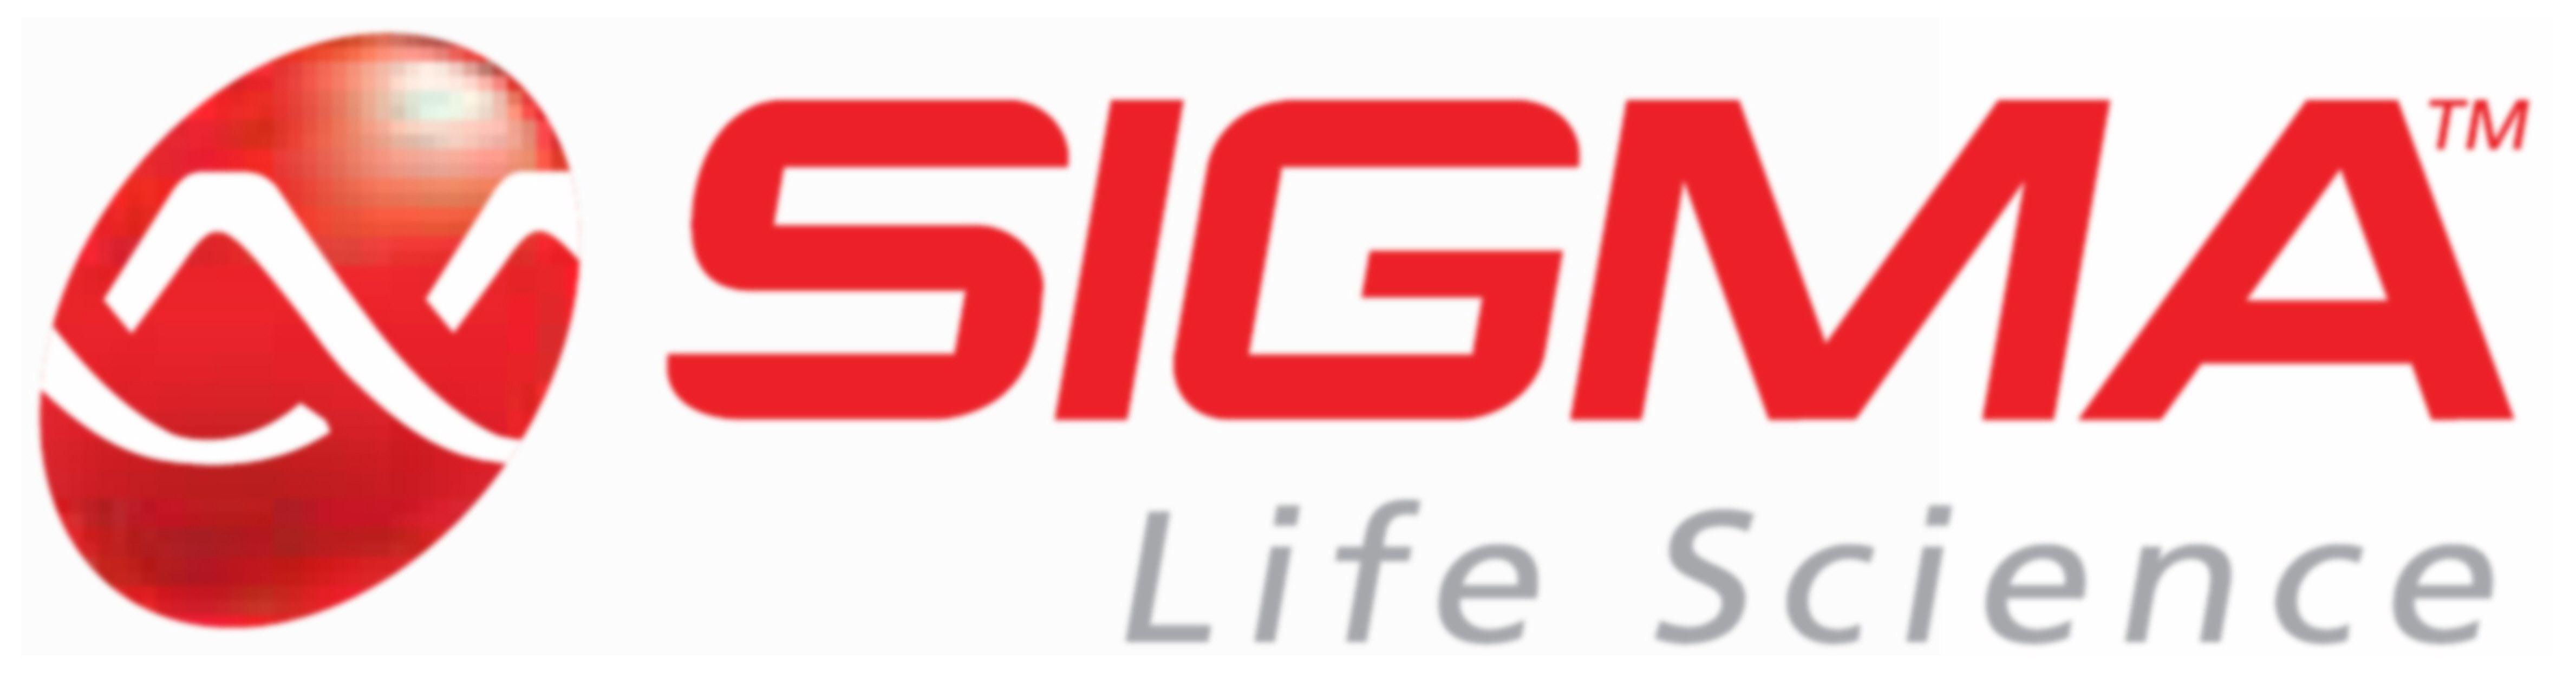 Sigma Logo - File:Sigma logo ab 2000.jpg - Wikimedia Commons